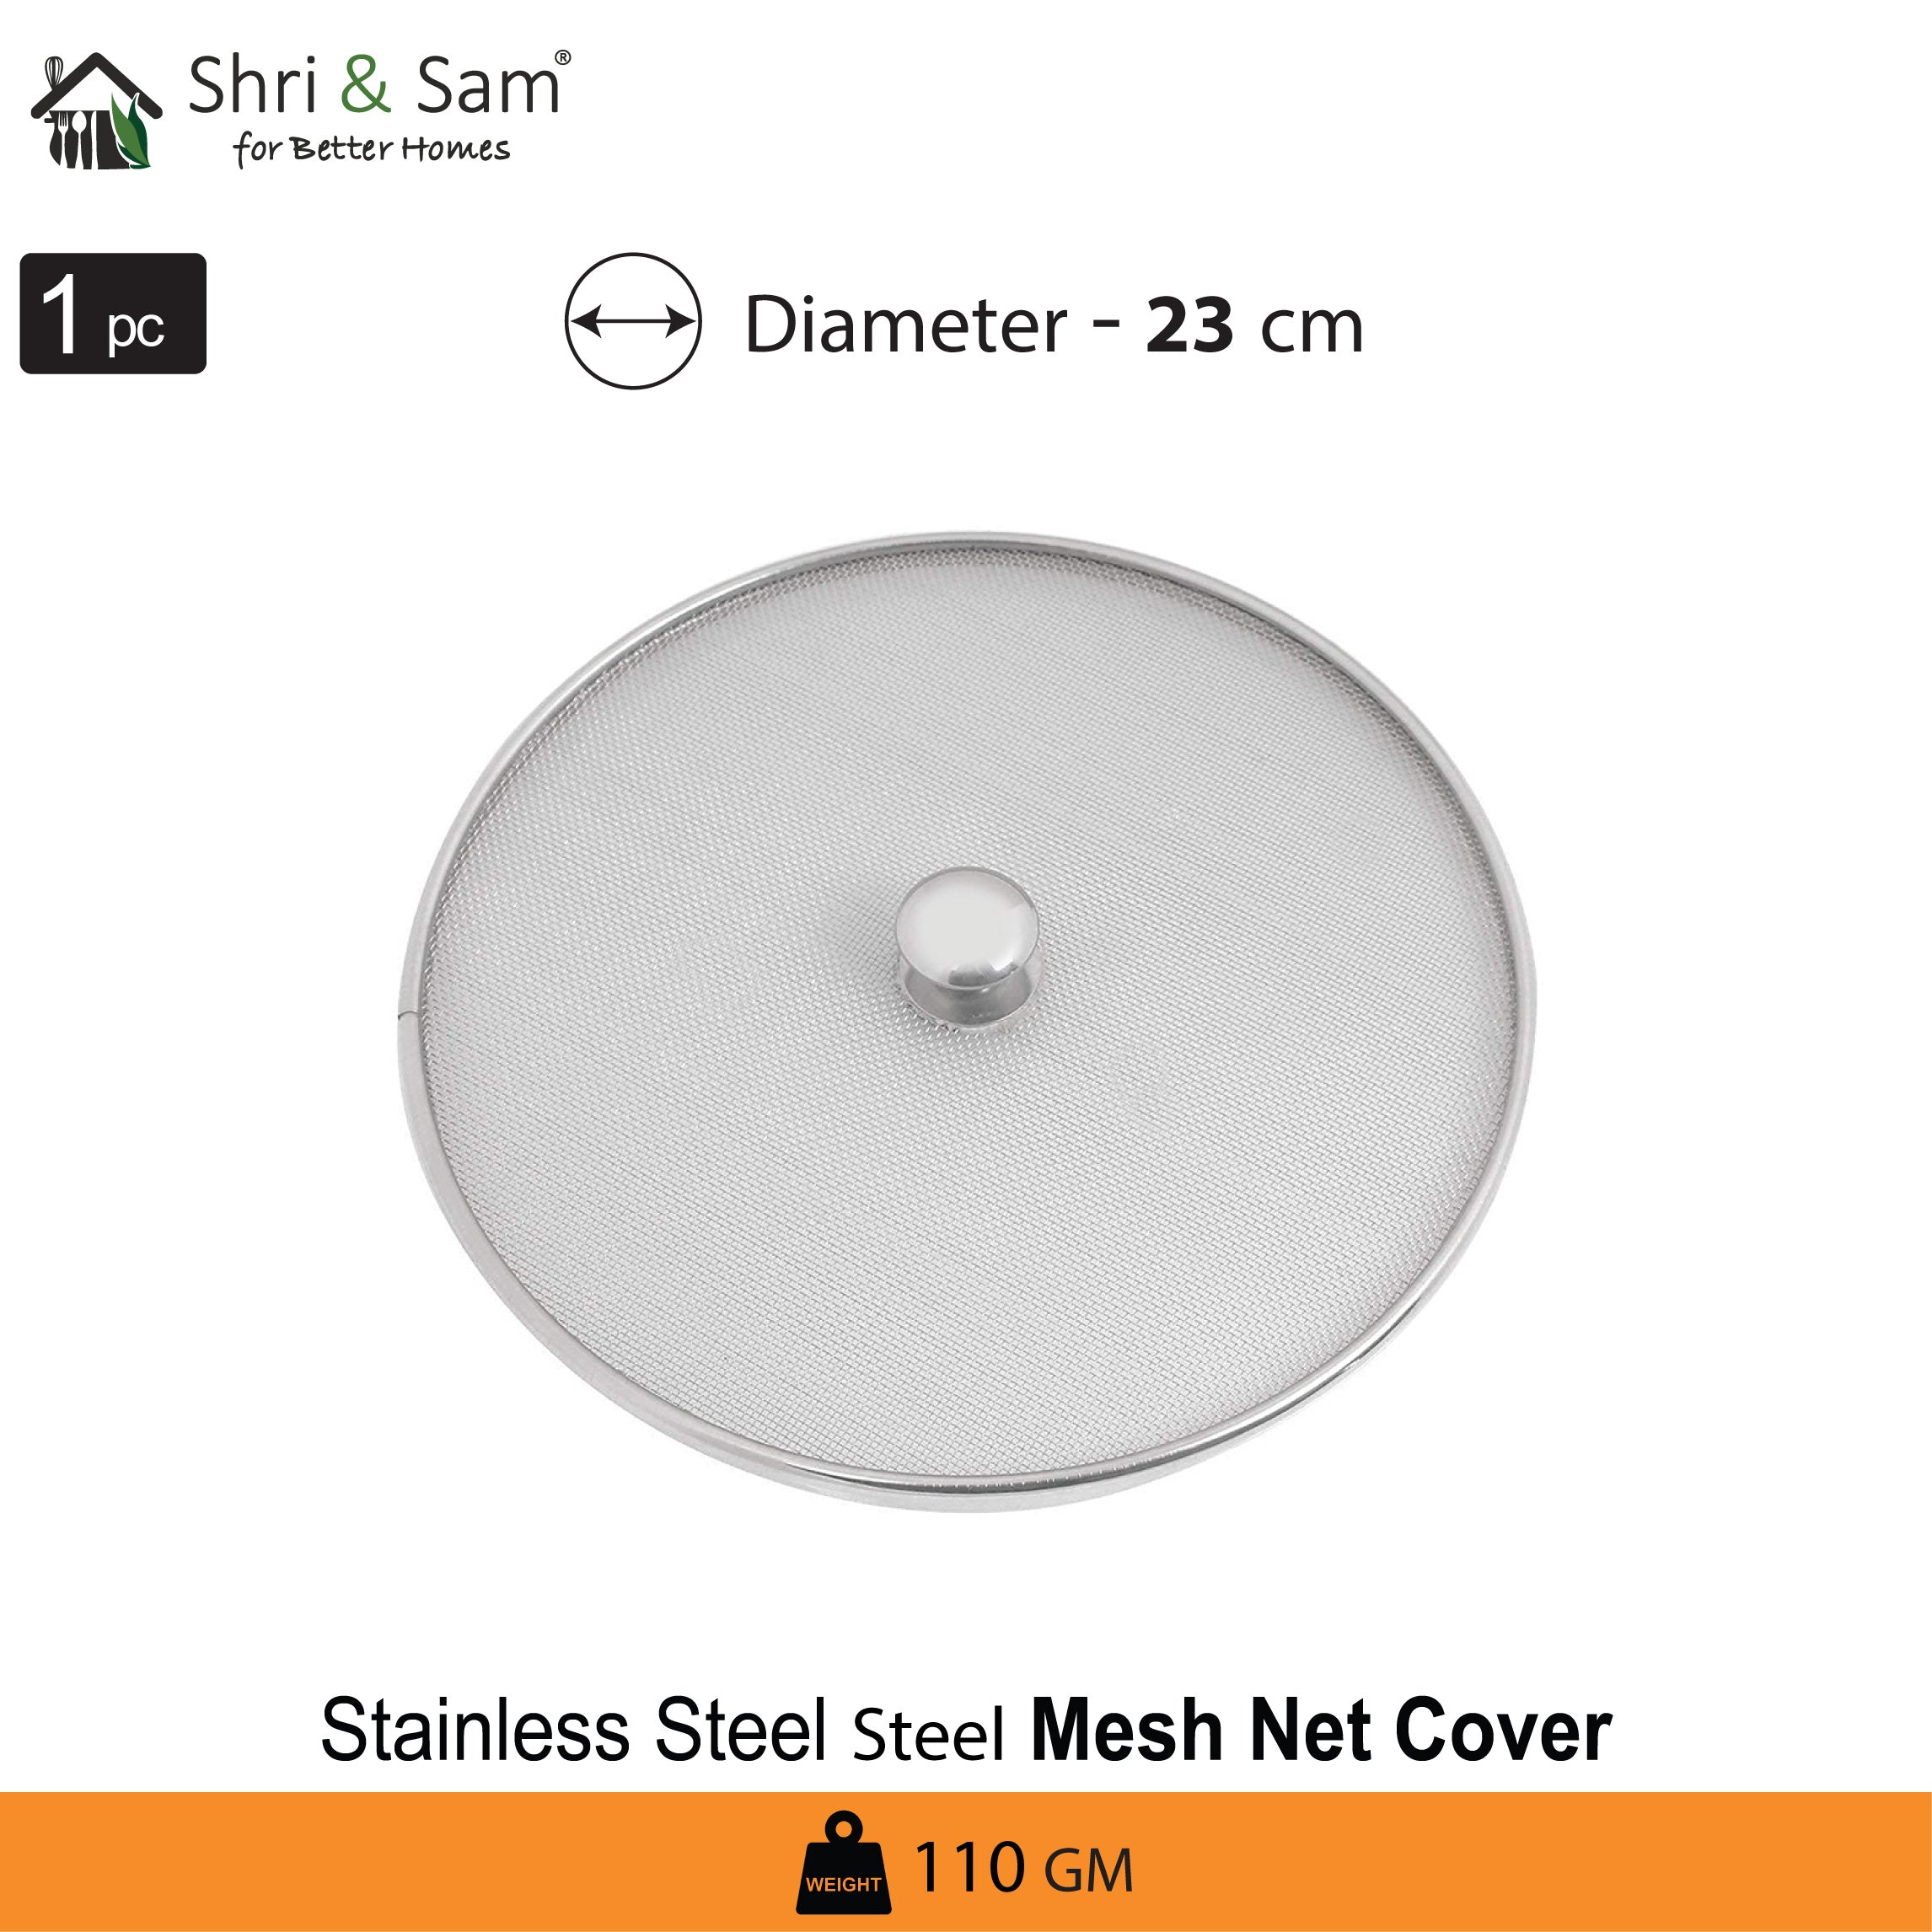 Stainless Steel Mesh Net Cover